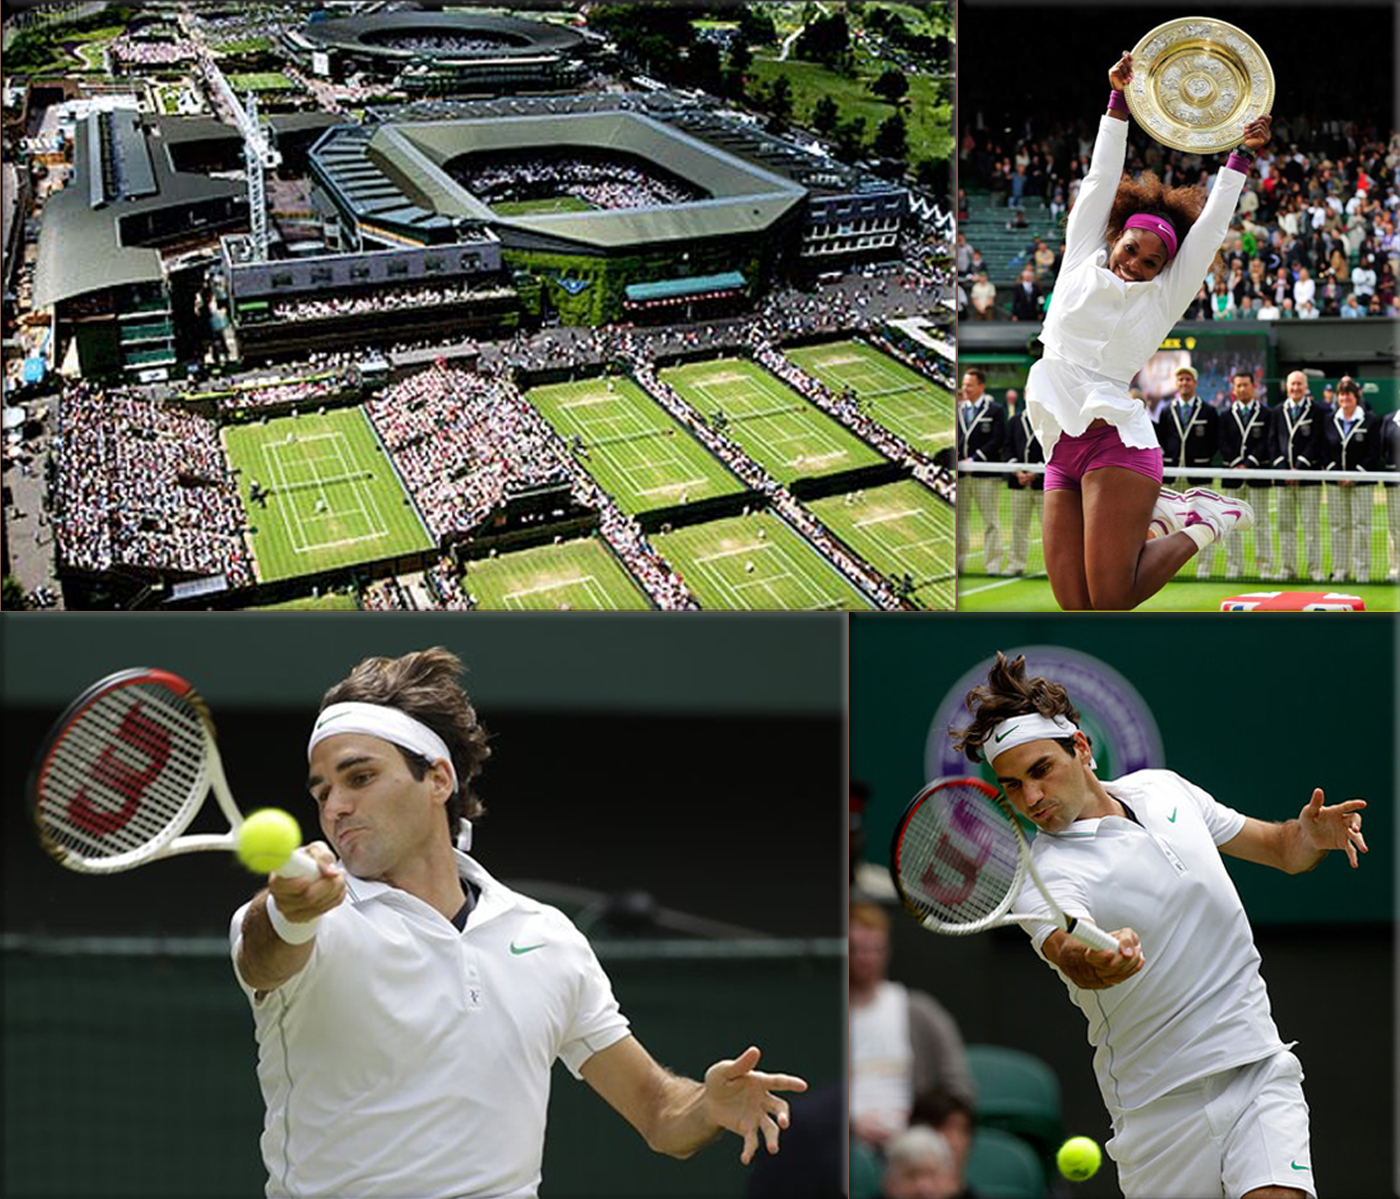 The inaugural Wimbledon Championships opens